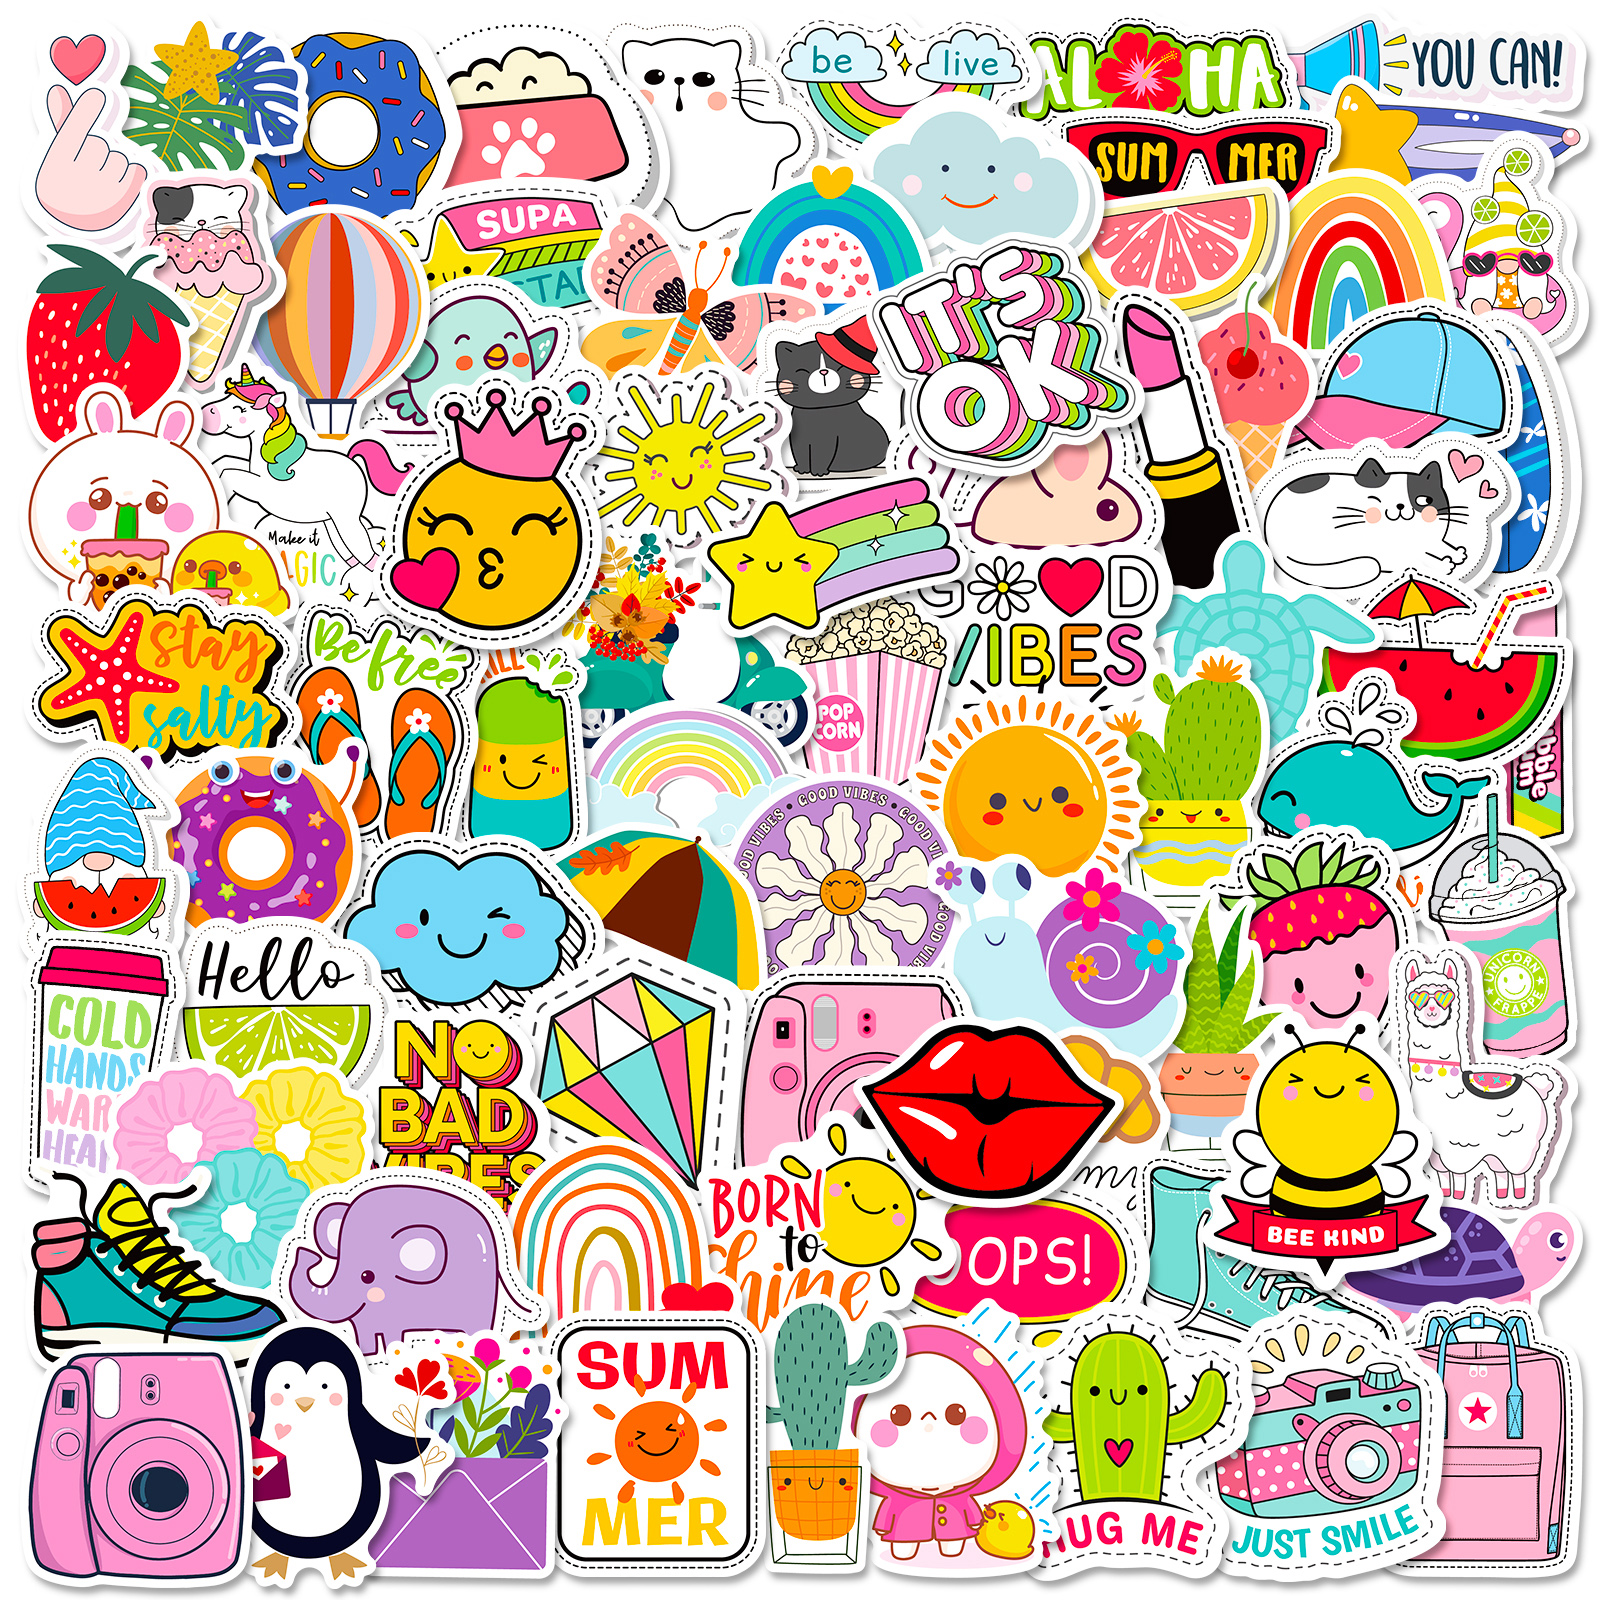 Colorful Mood Tracker Sticker Sheet, Bullet Journal, Scrapbook, Mood  Tracker Planner Deco Sticker, Emotion Stickers 